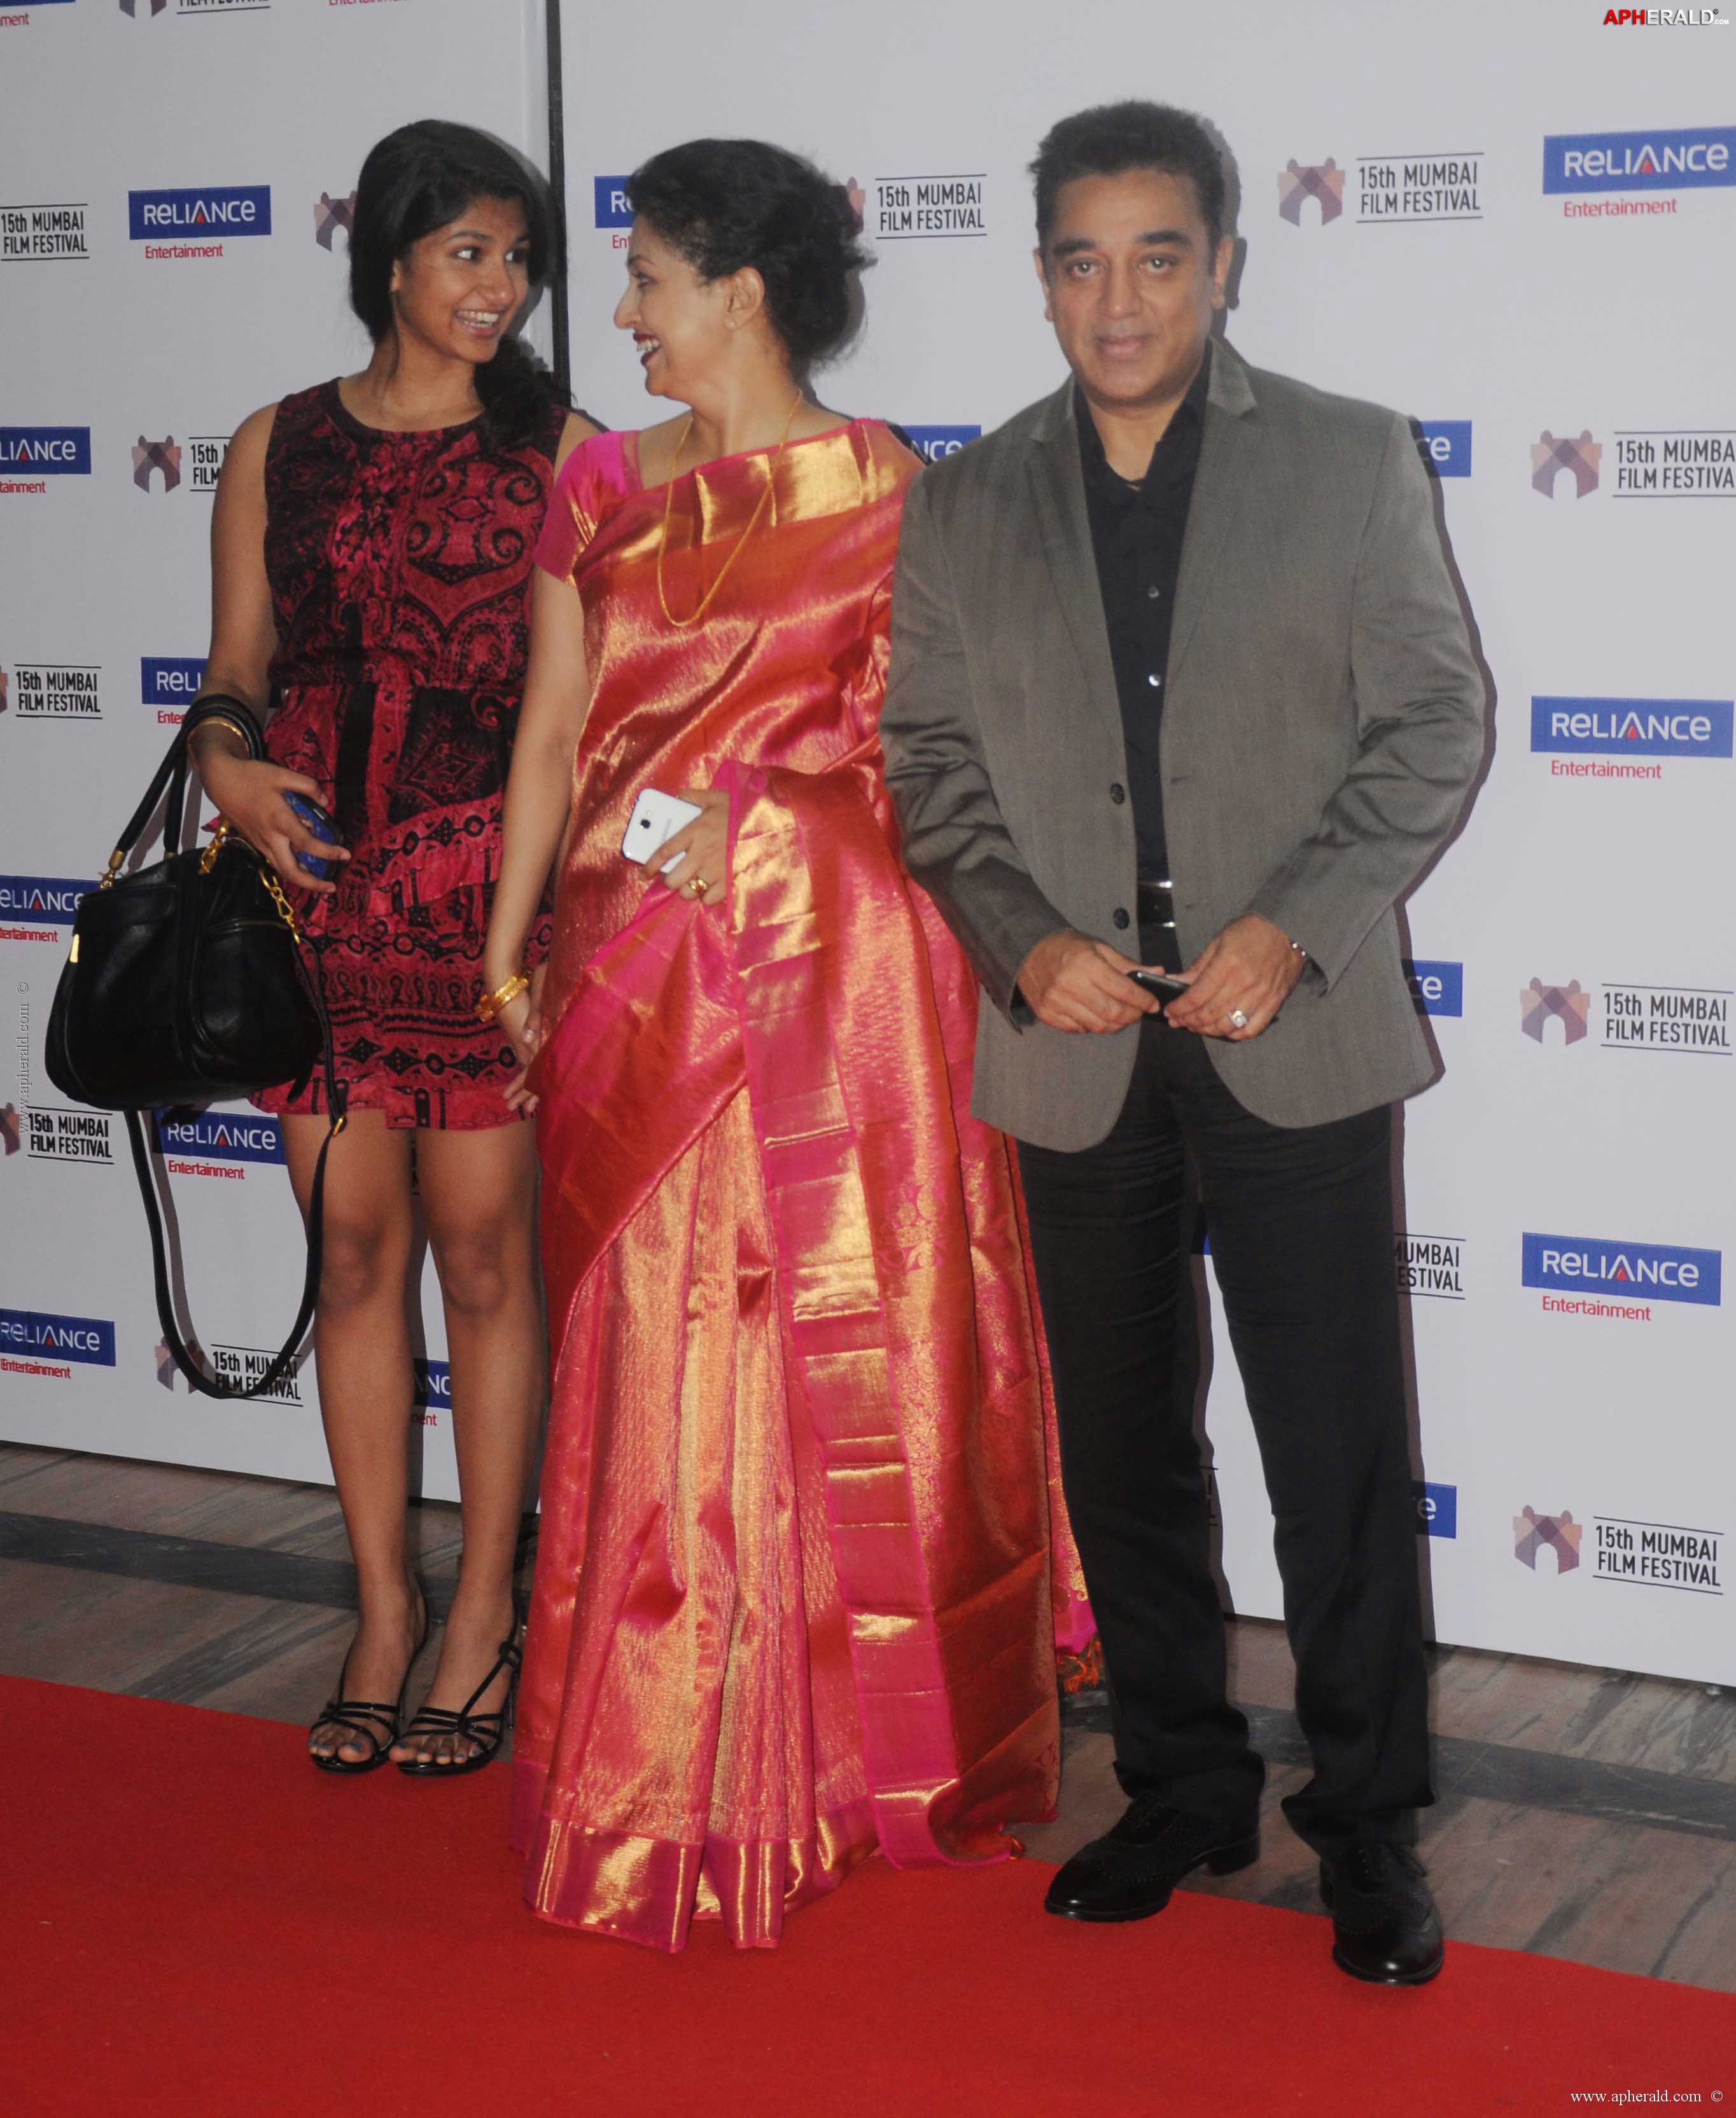 15th Mumbai Film Festival Opening 